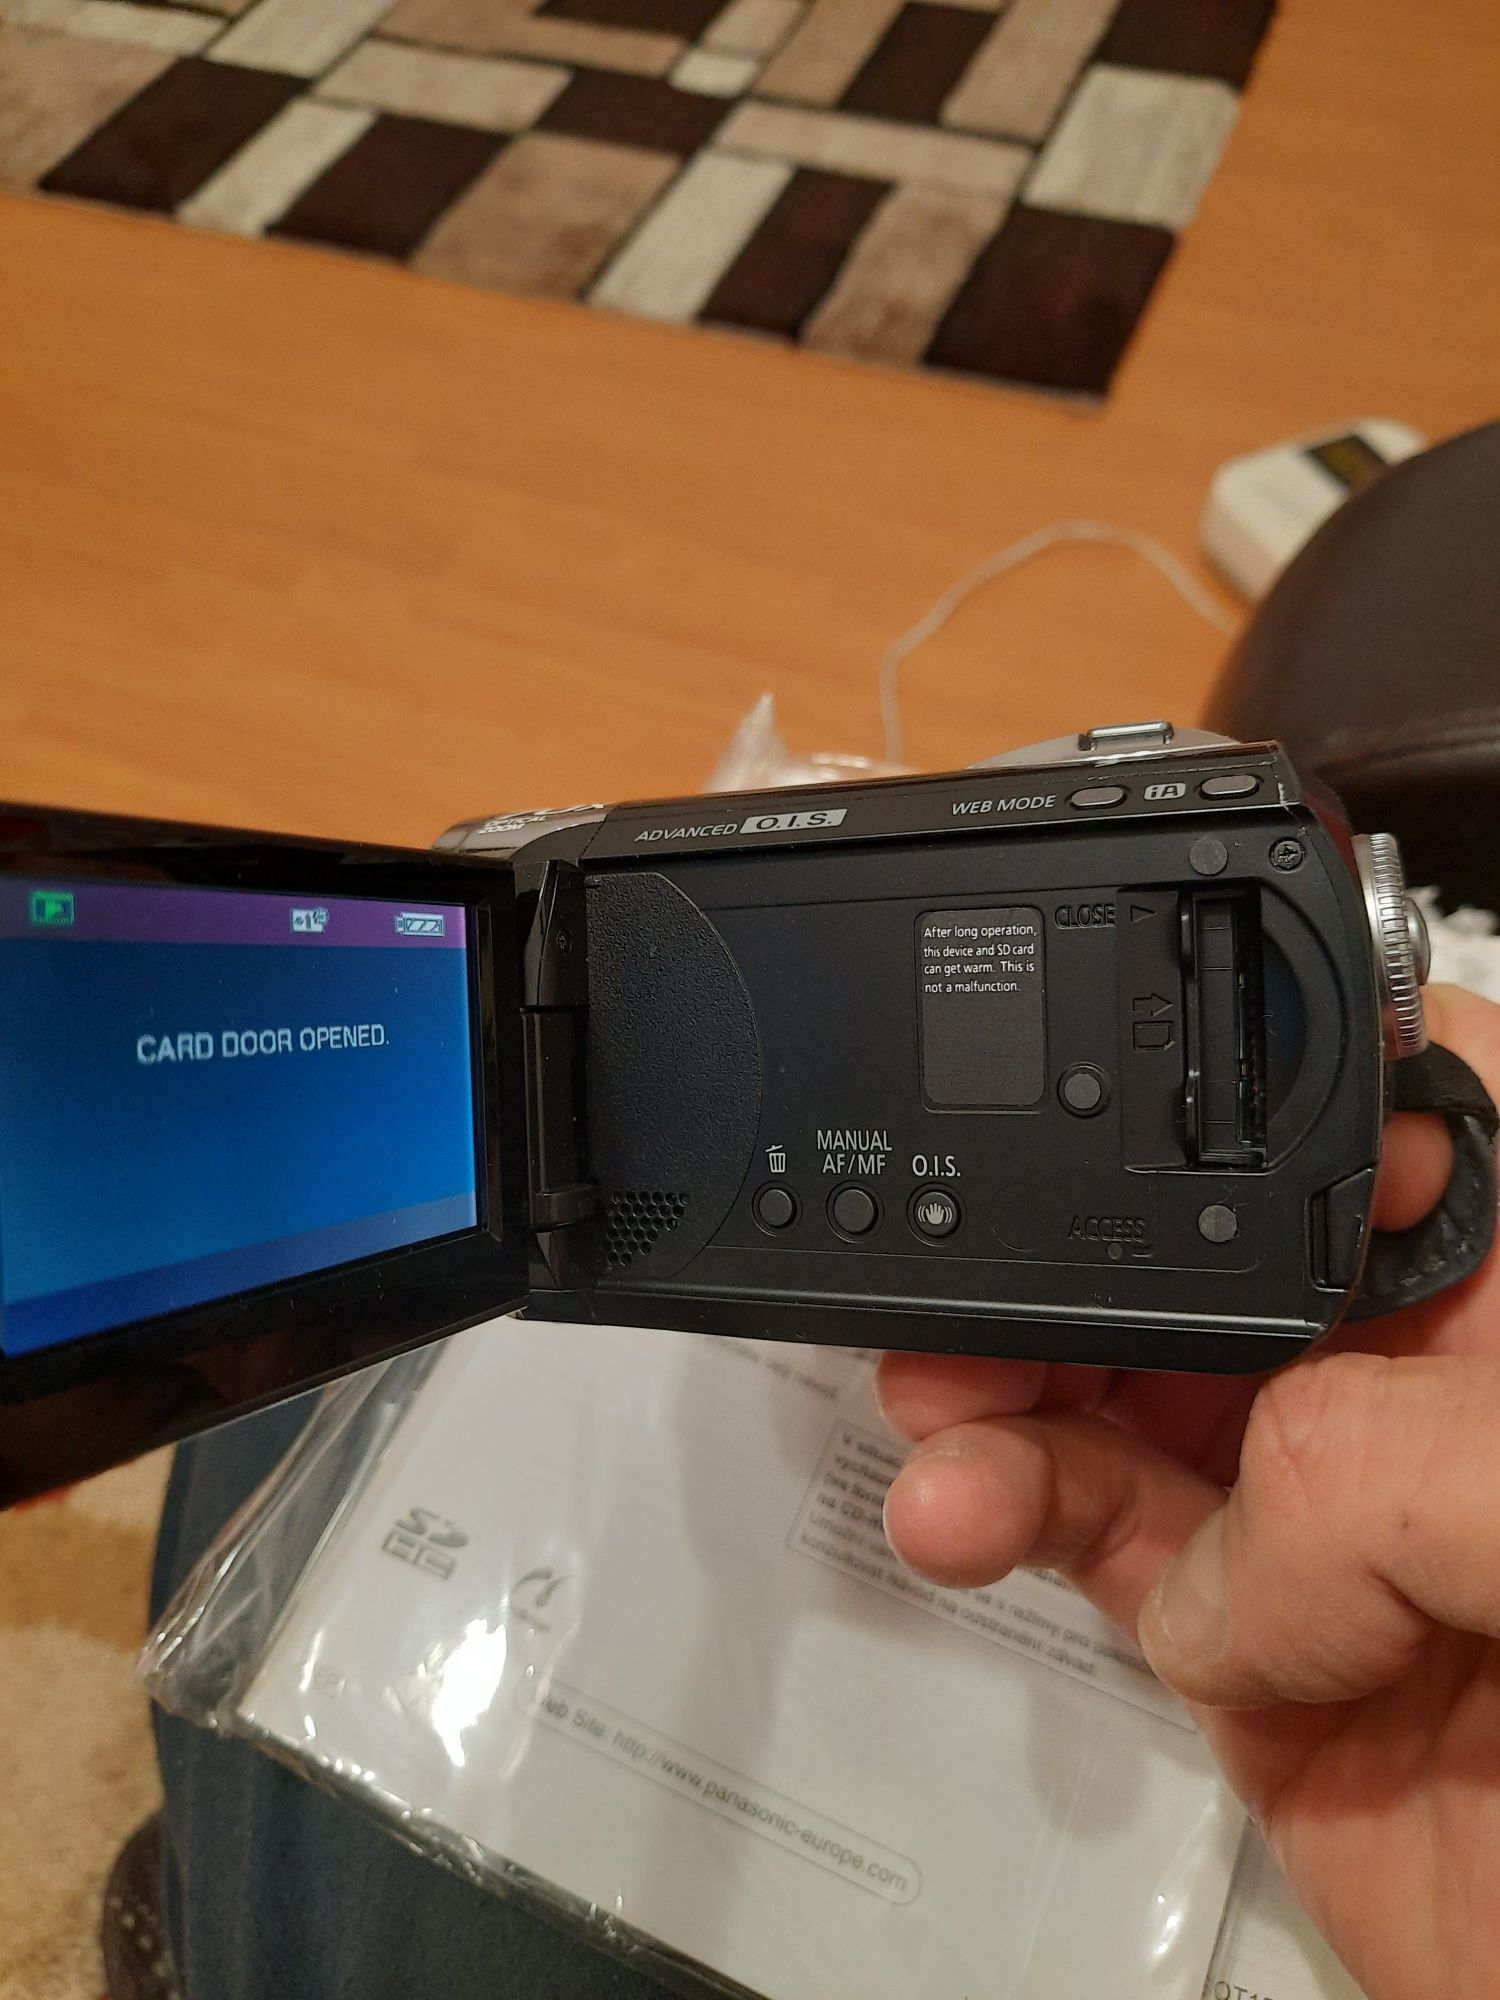 Camera video Panasonic SDR-S26